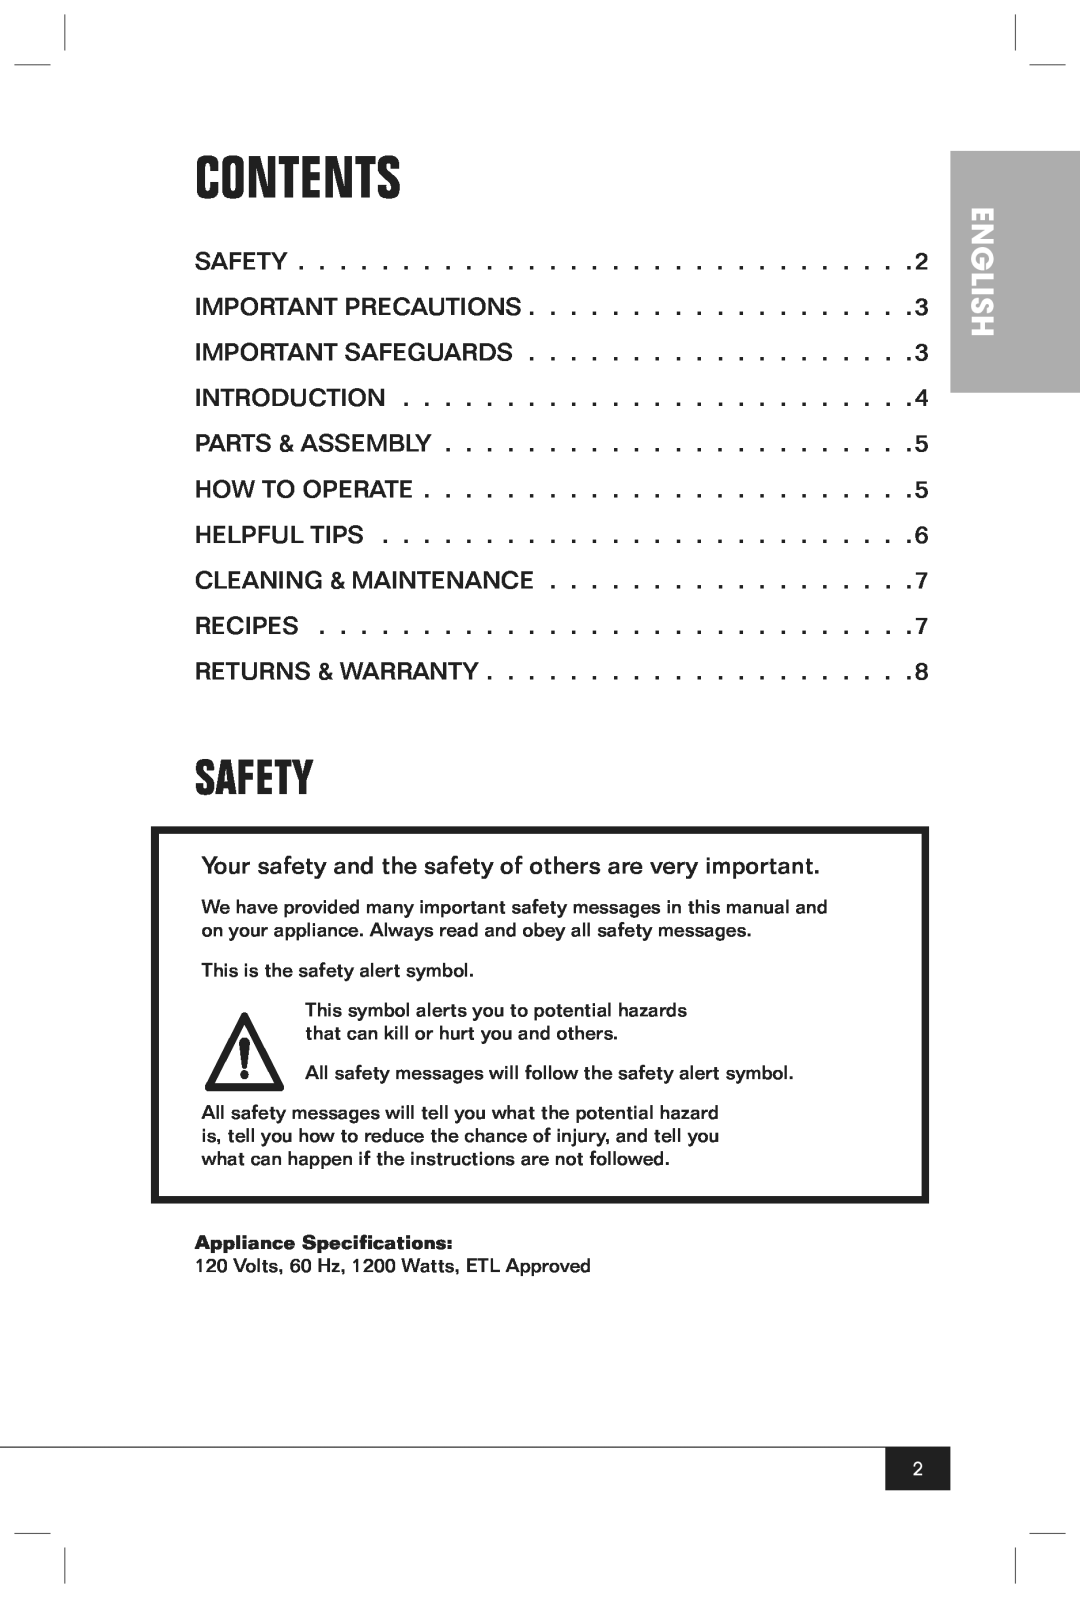 Nostalgia Electrics FG100 manual Safety, English, Contents 